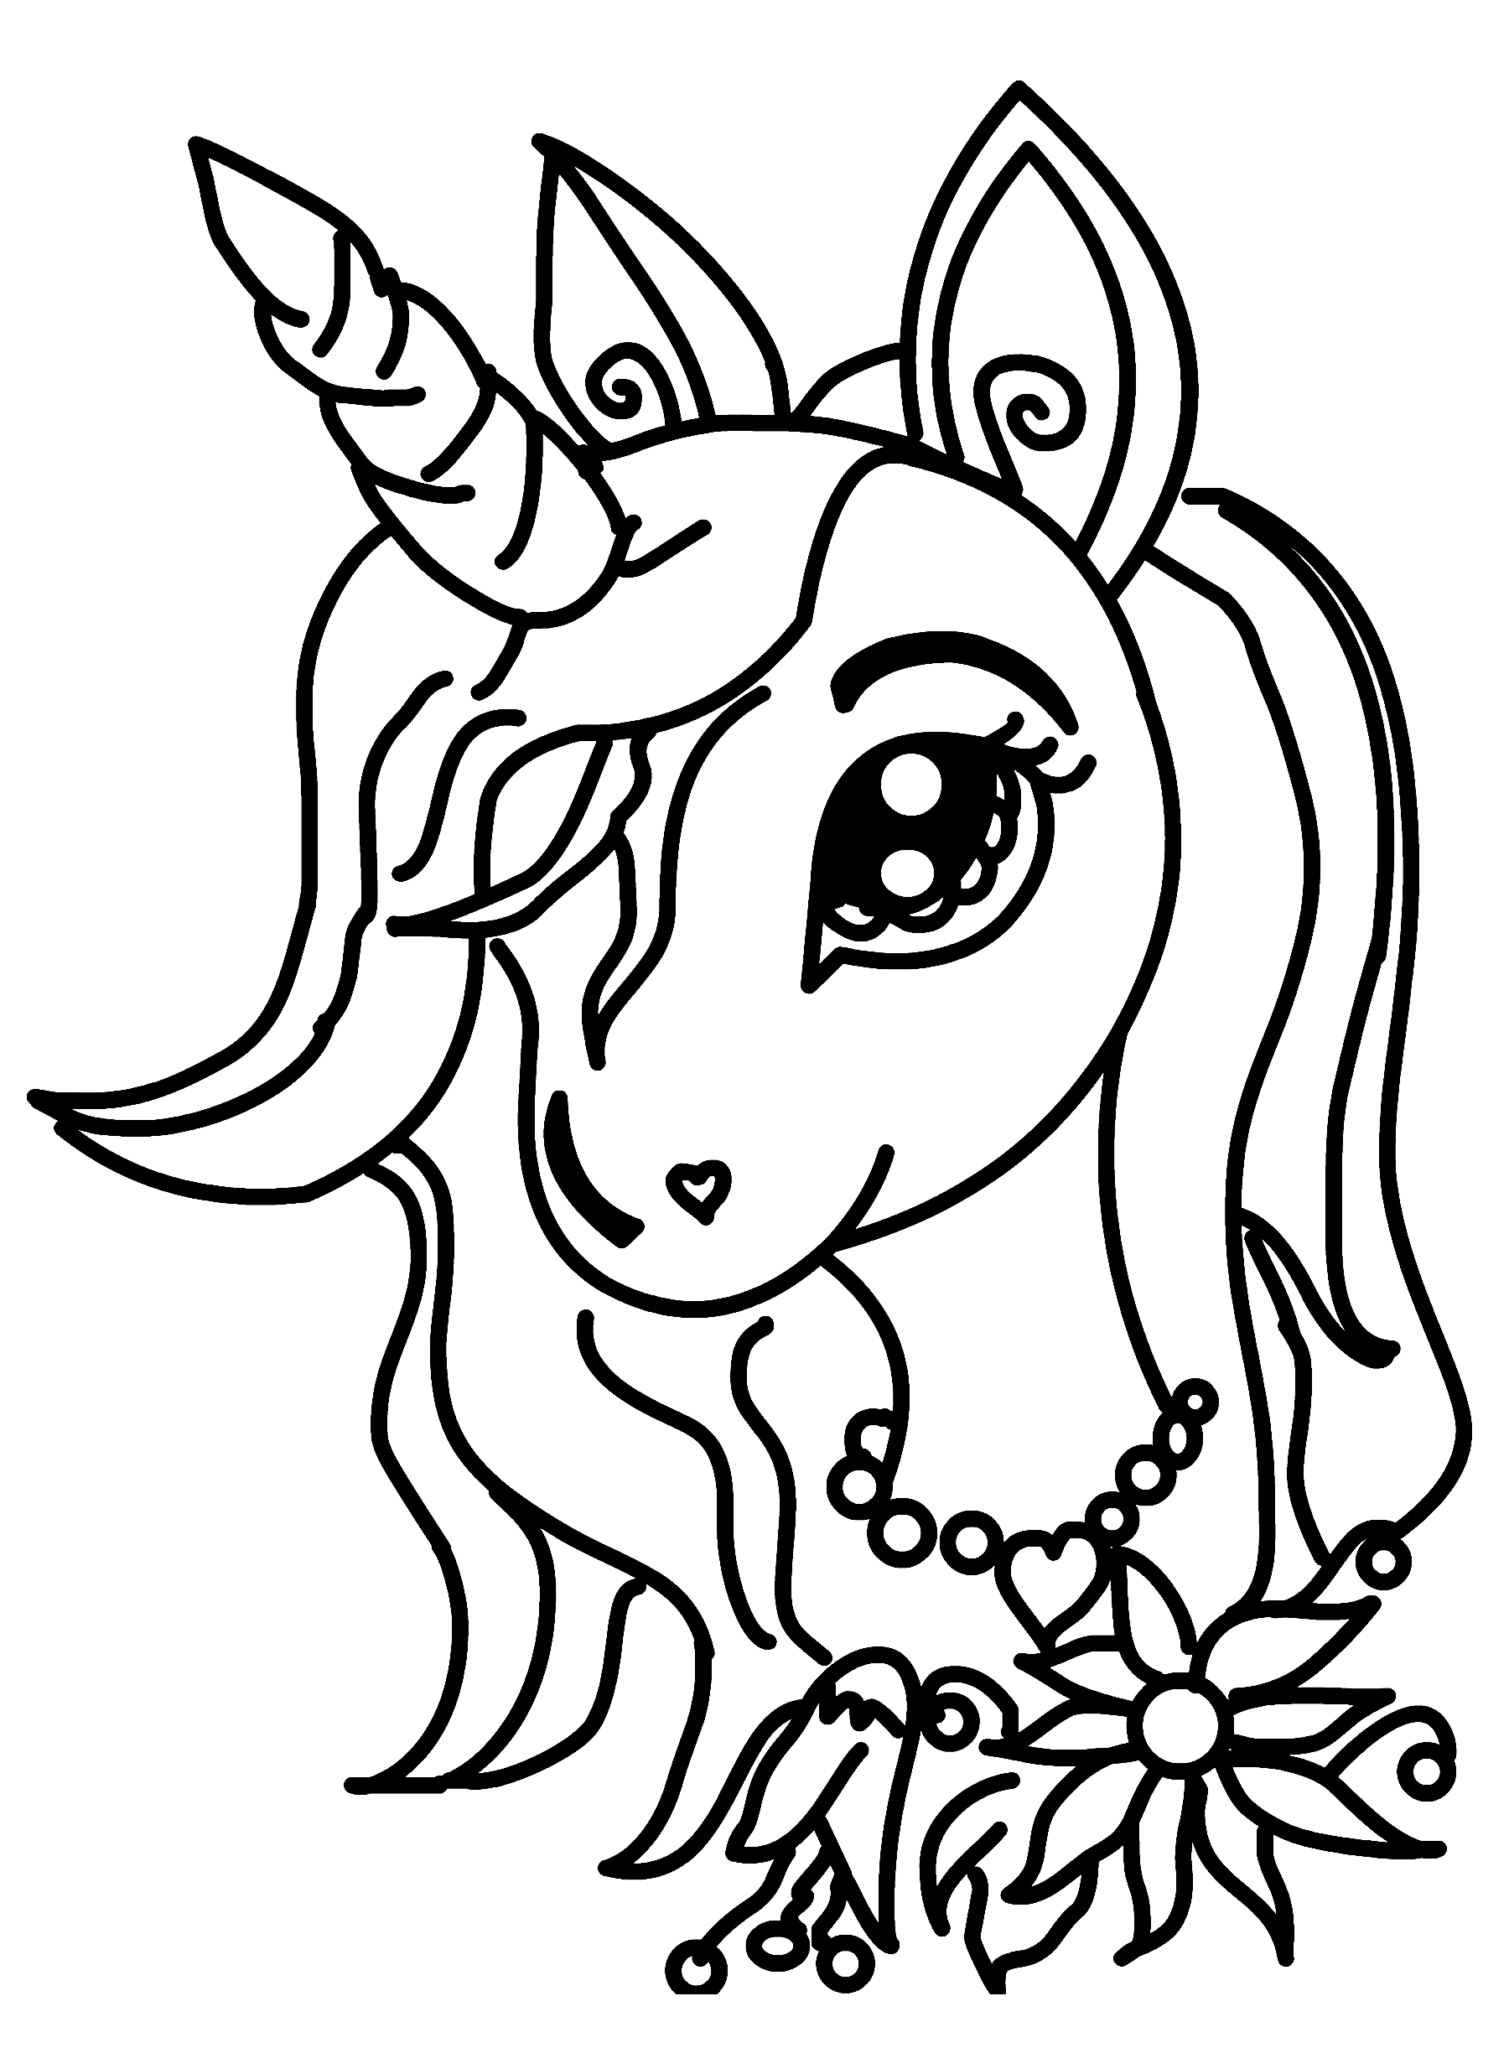 free printable coloring page unicorn